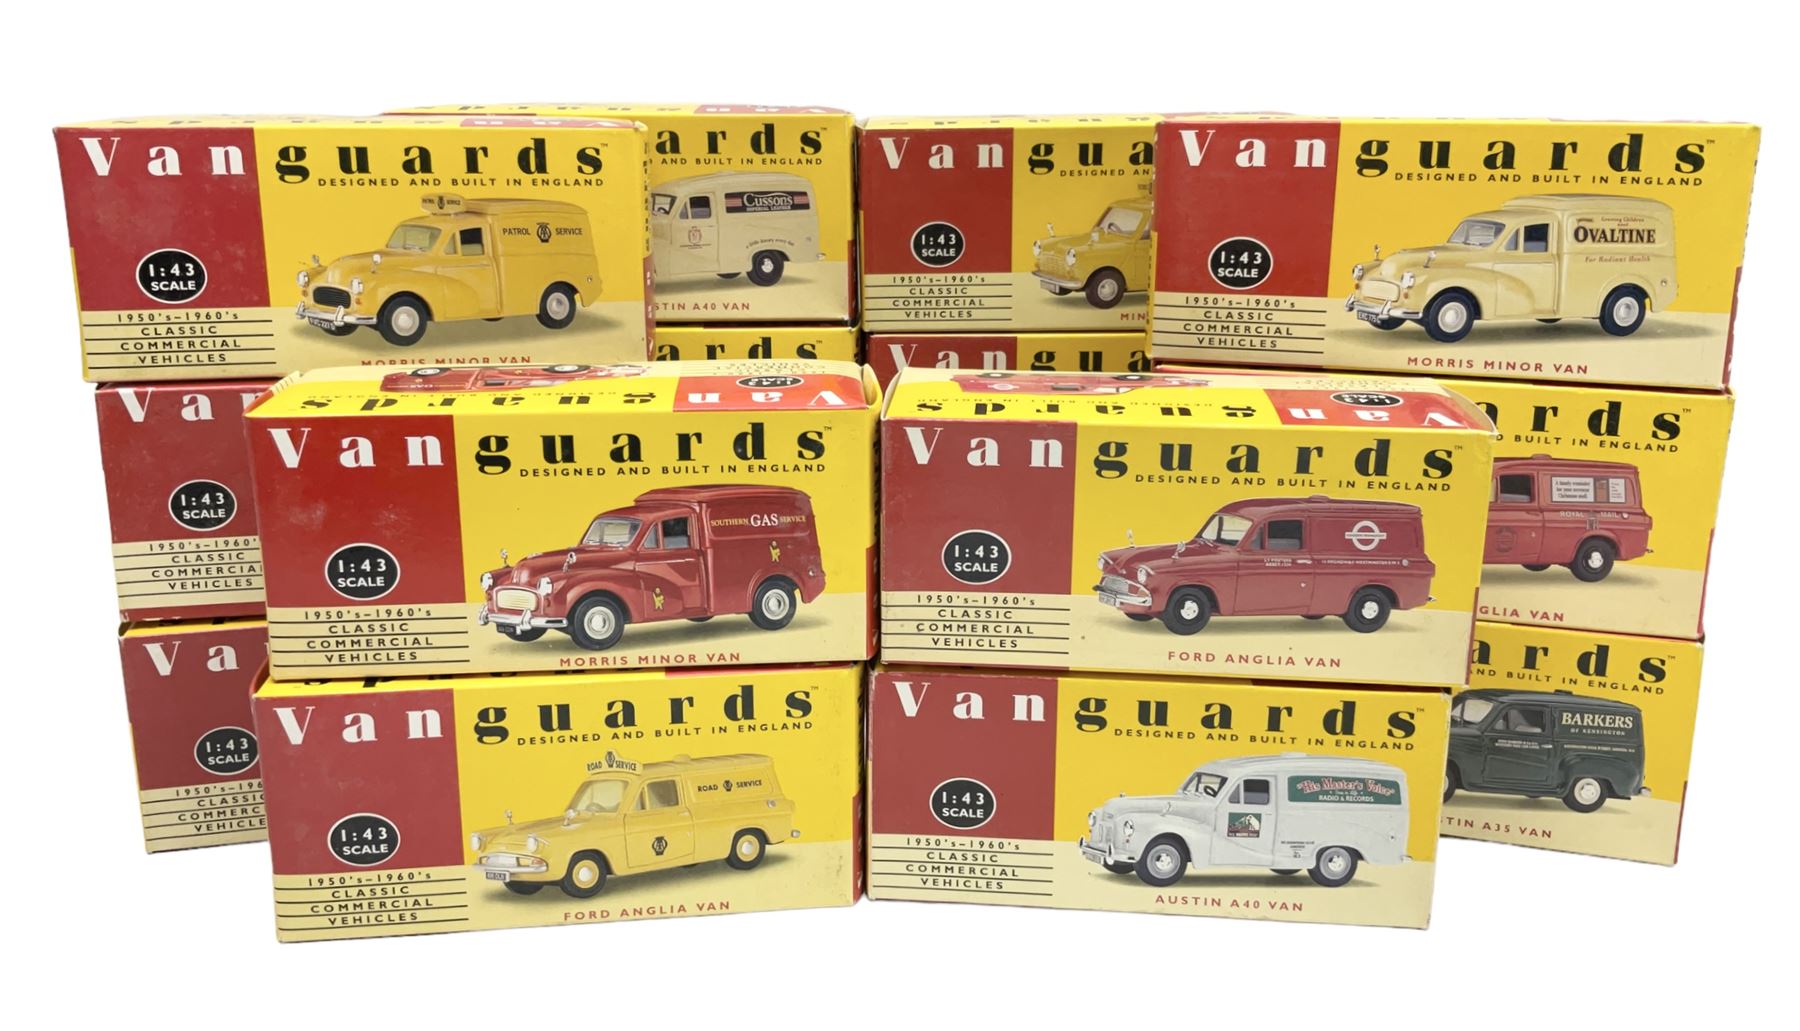 Sixteen Lledo Vanguards 1:43 scale 1950's-1960's Classic Commercial Vehicles die-cast models